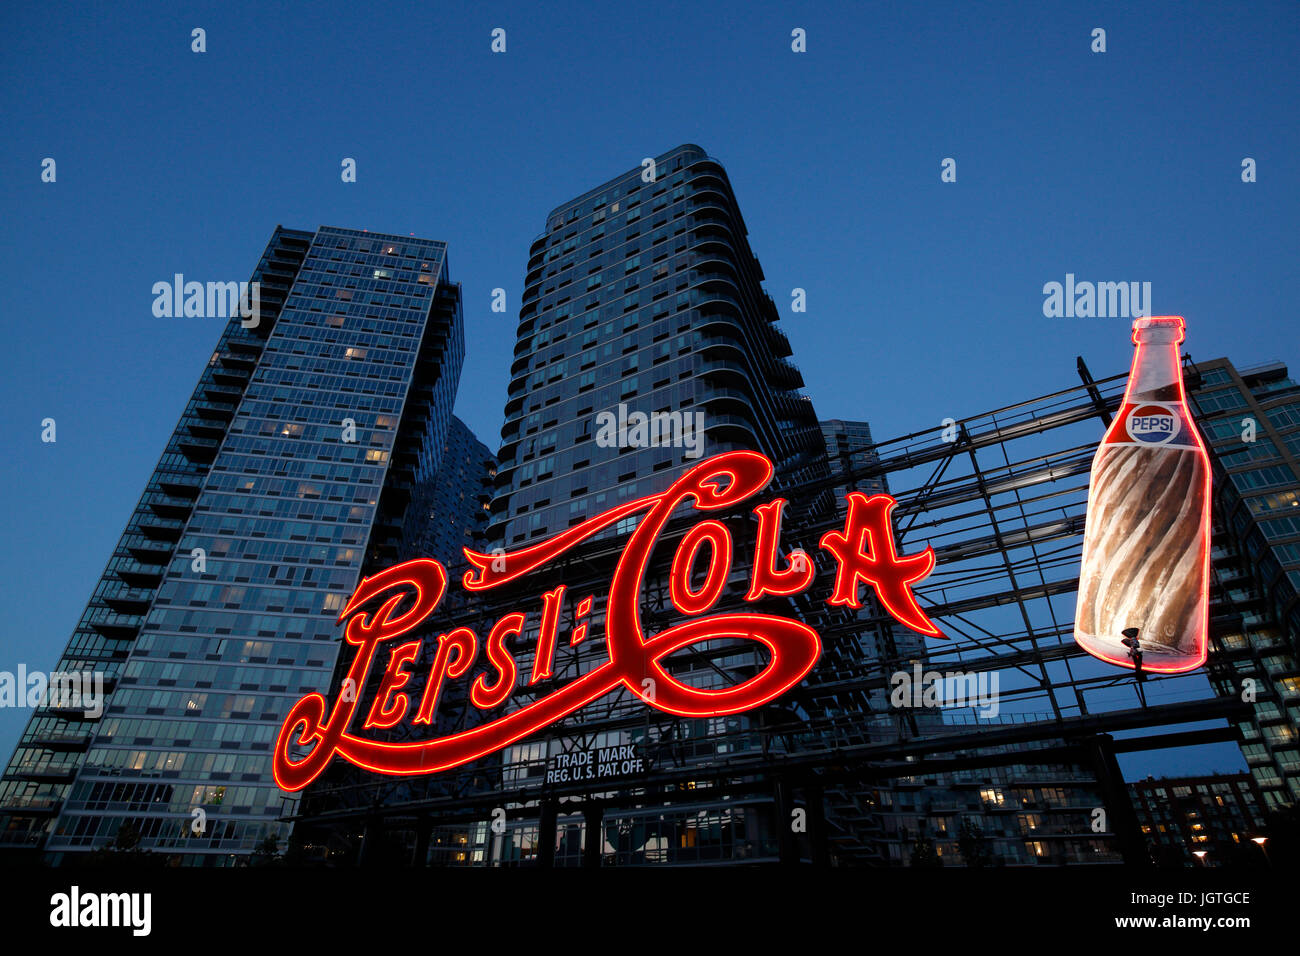 Pepsi cola leuchtreklame long island city -Fotos und -Bildmaterial in hoher  Auflösung – Alamy